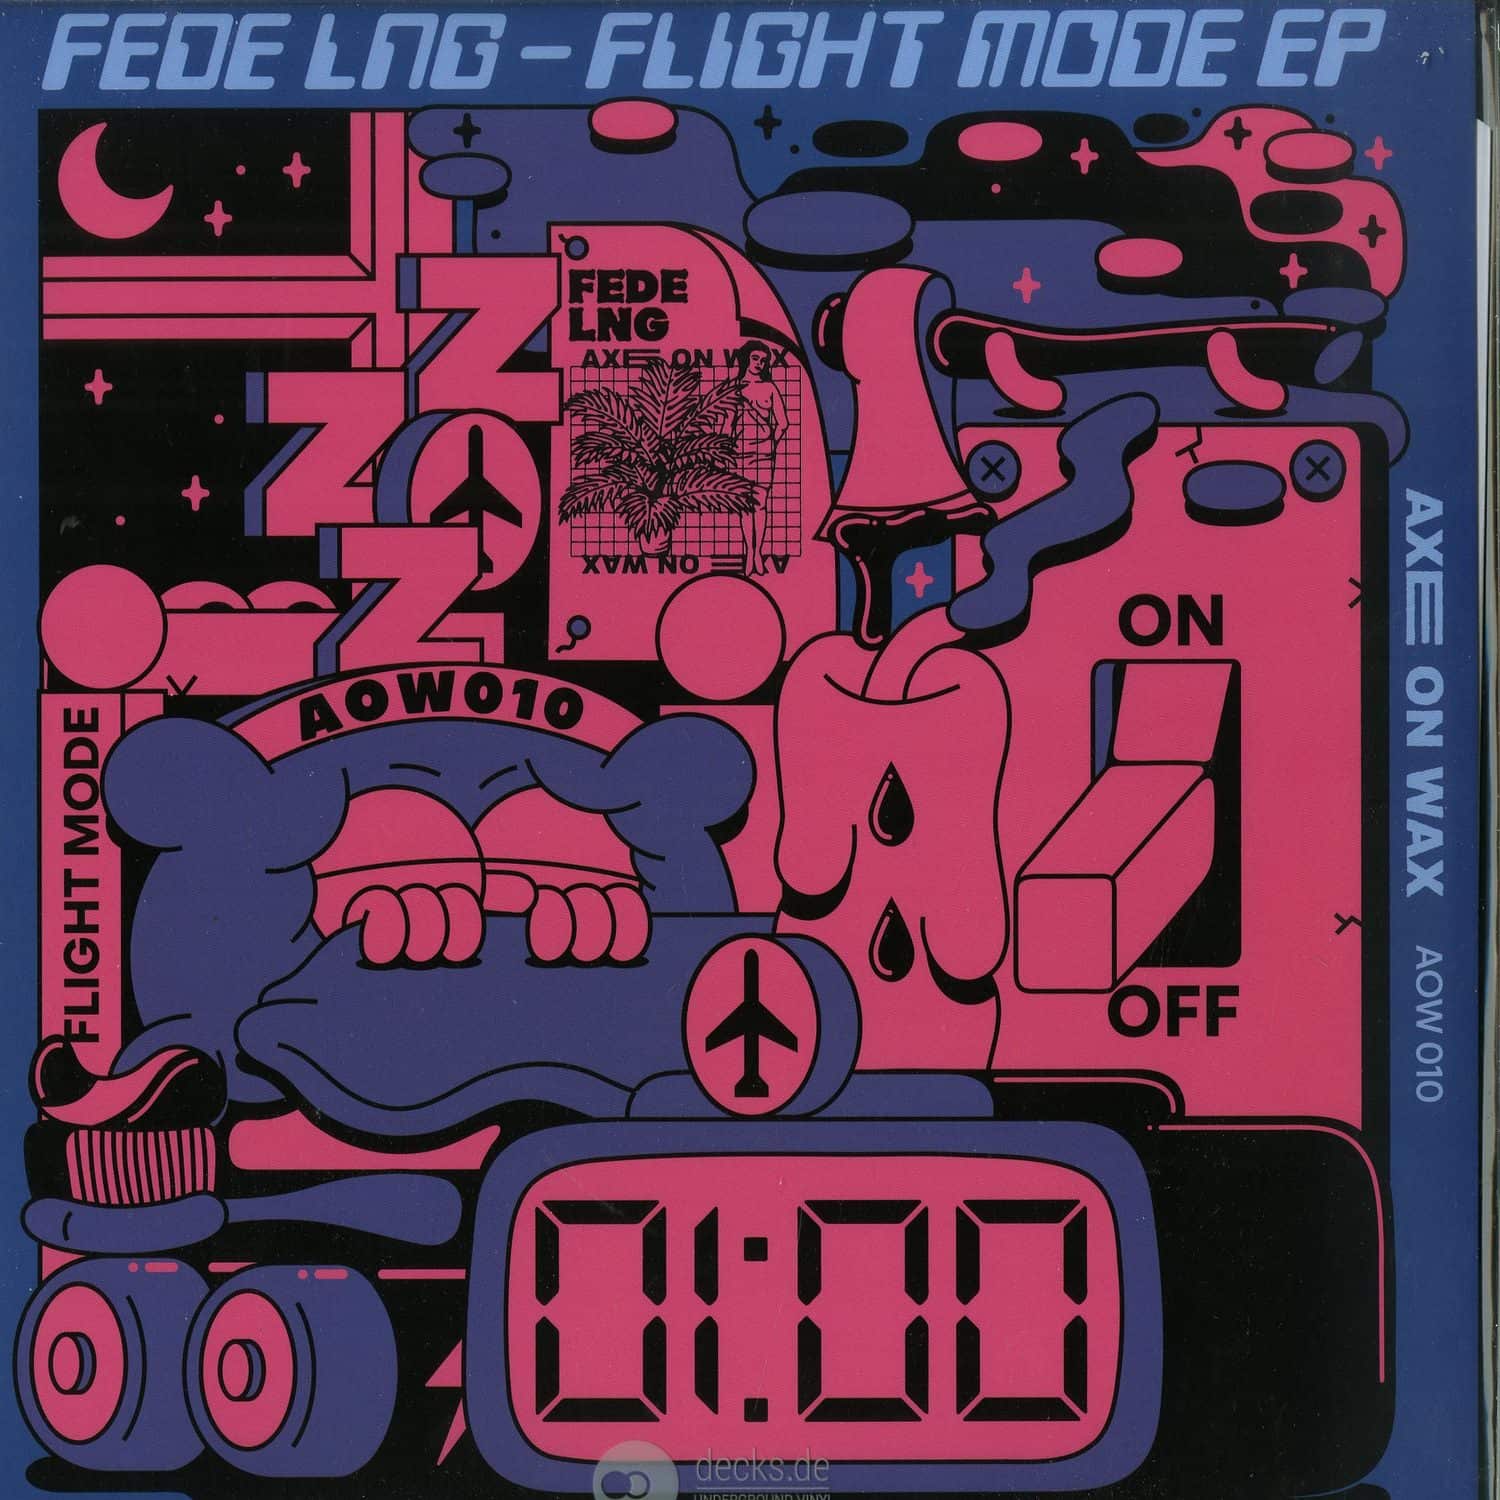 Fede Lng - FLIGHT MODE EP 